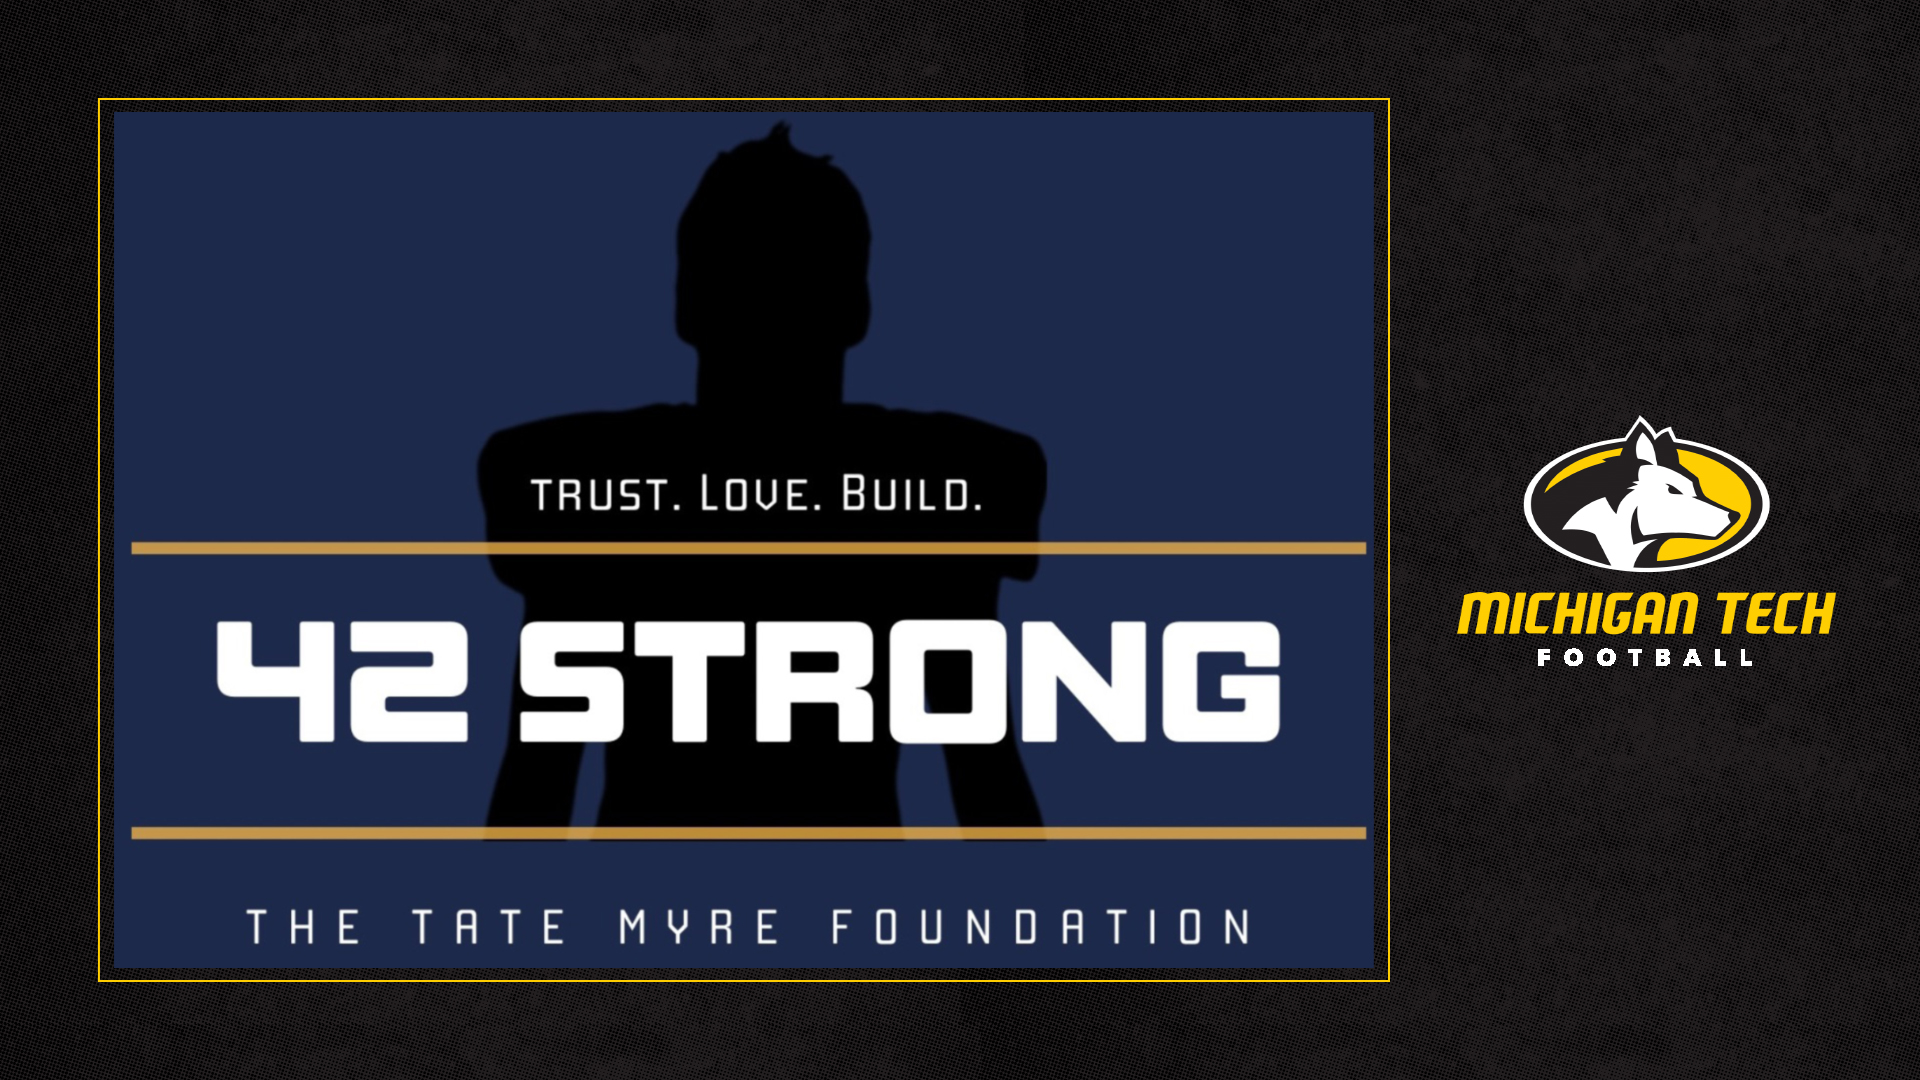 Michigan Tech Football Supports The Tate Myre Foundation